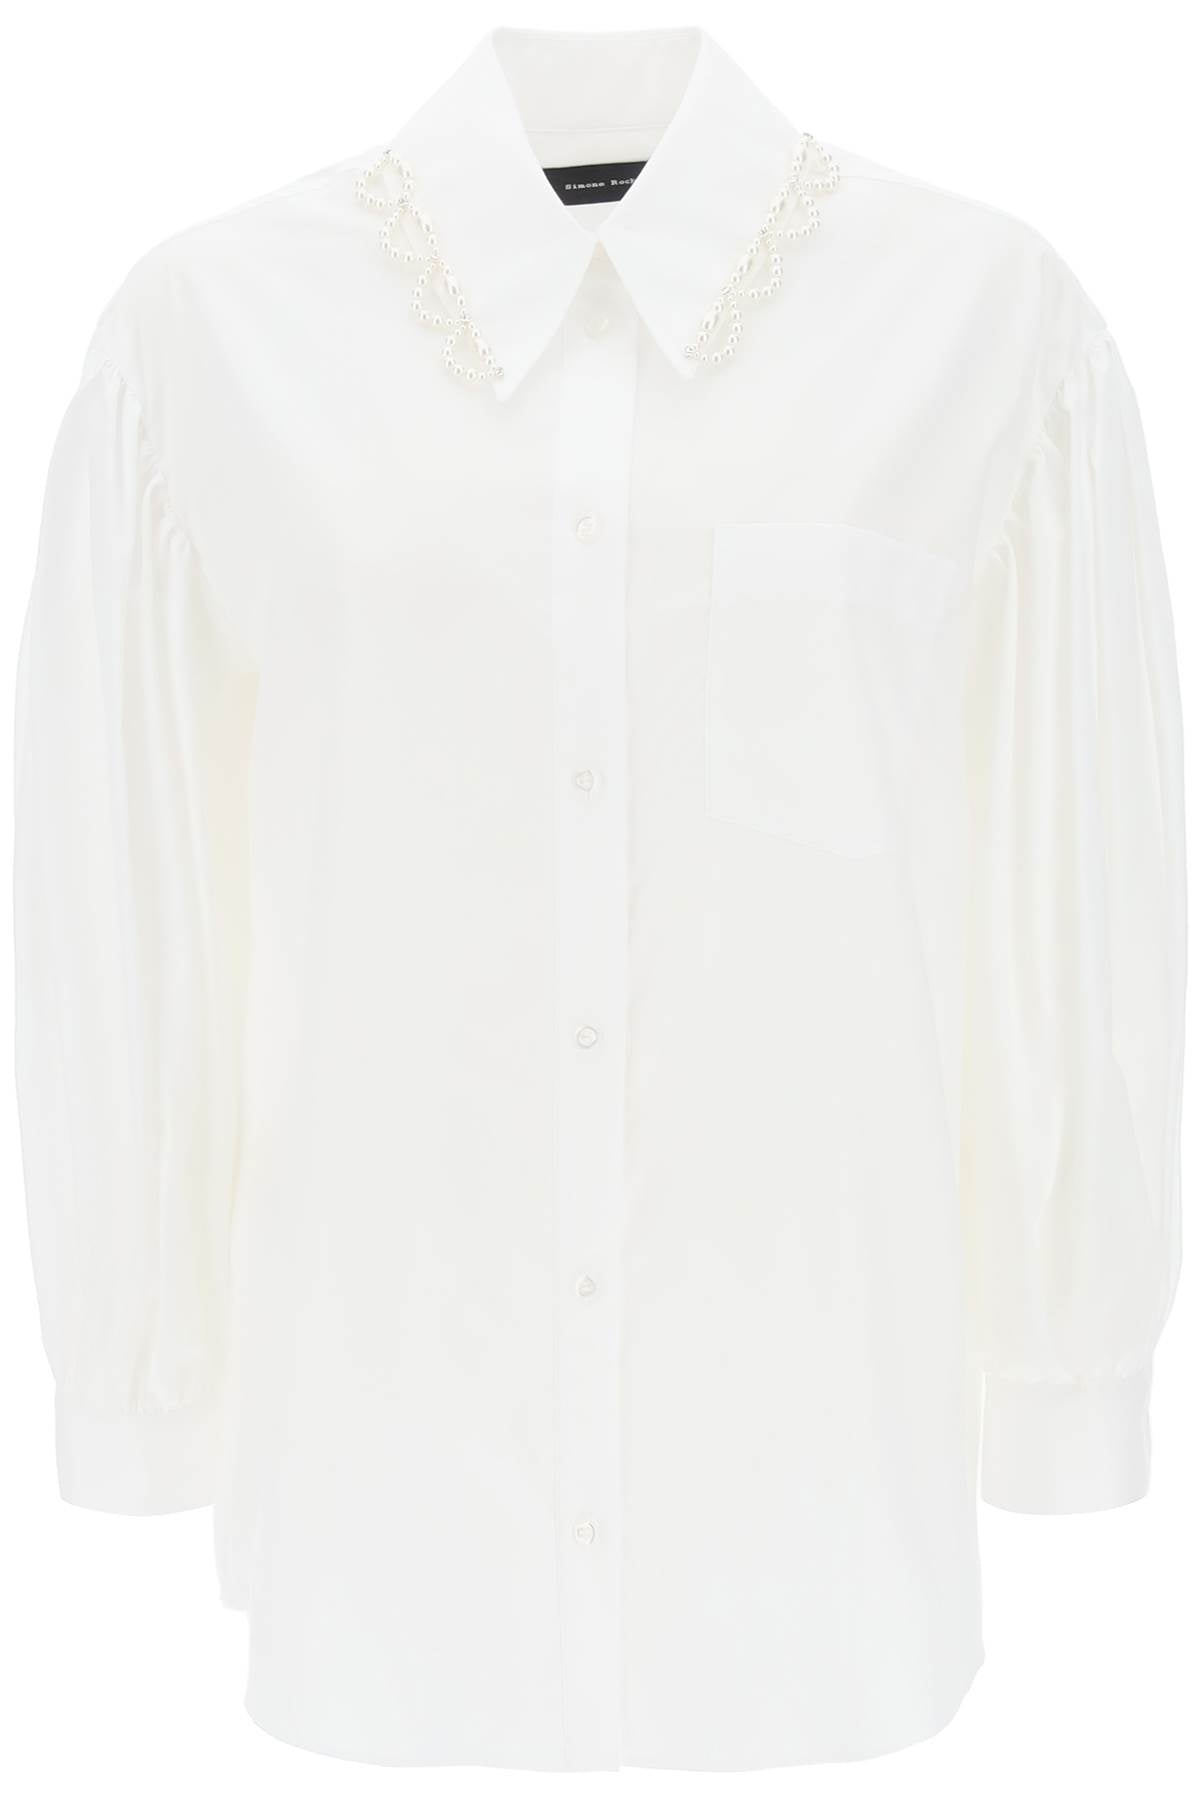 Simone rocha puff sleeve shirt with embellishment 5191B 1025 WHITE PEARL CLEAR